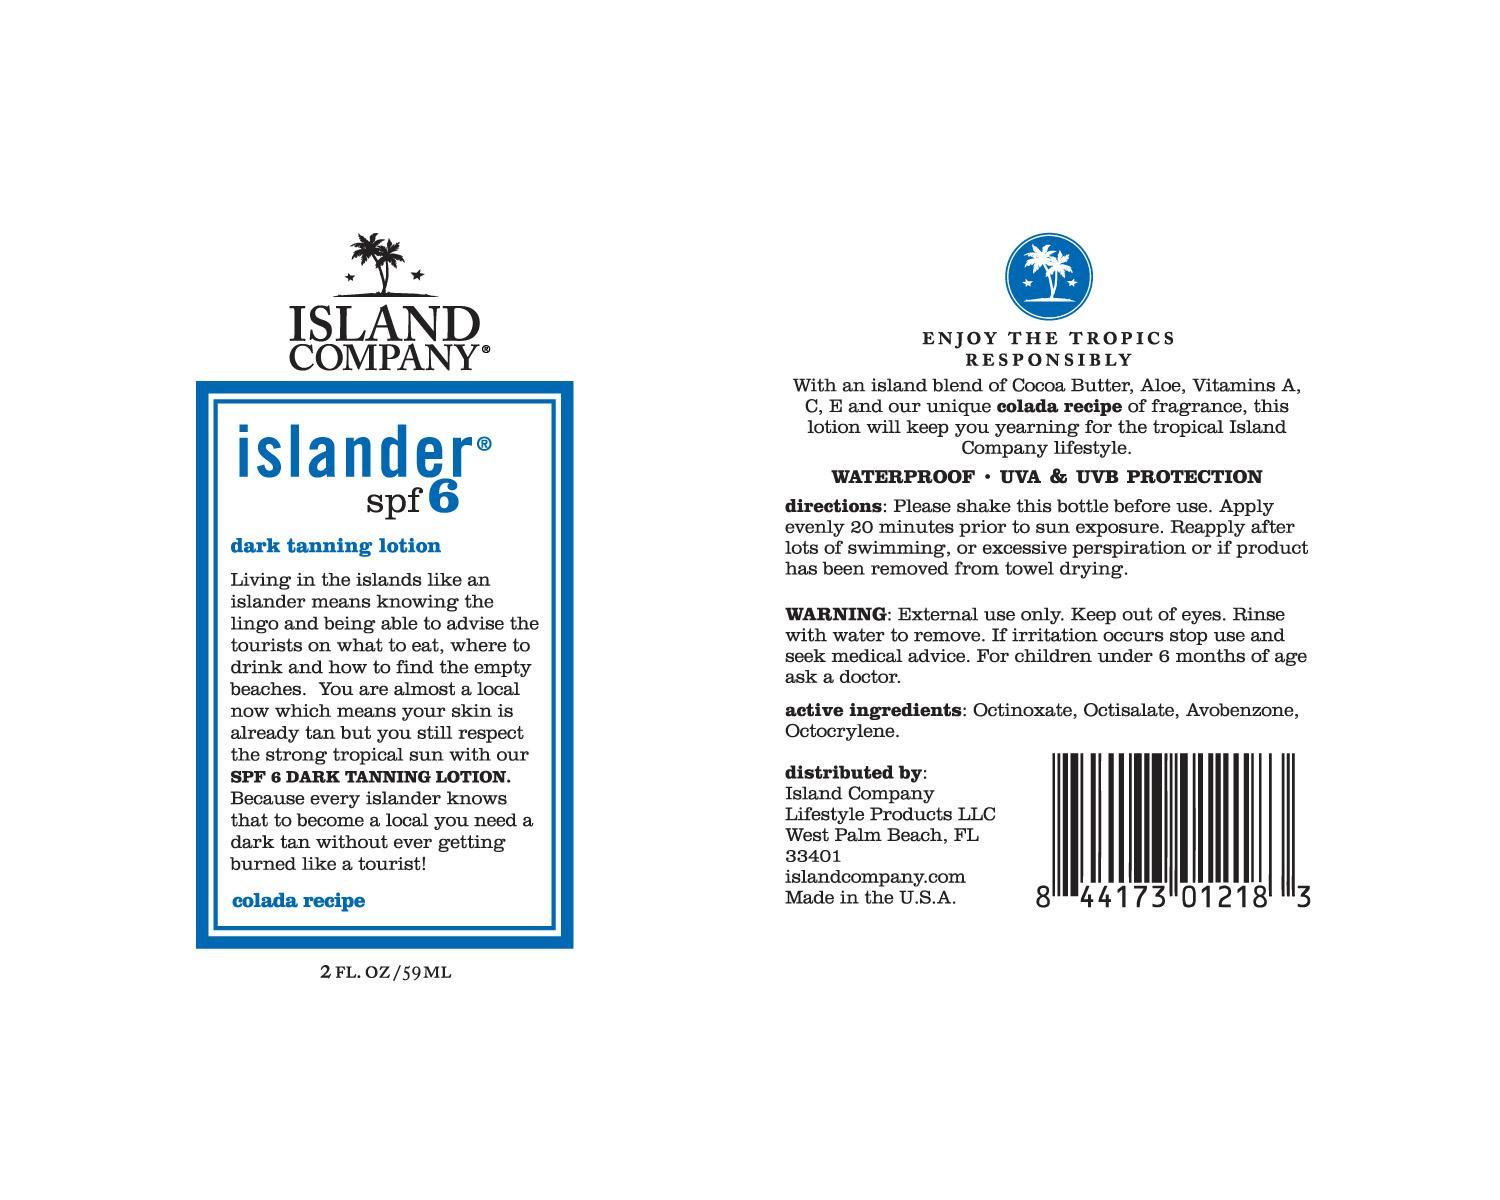 Islander spf6 2oz Label